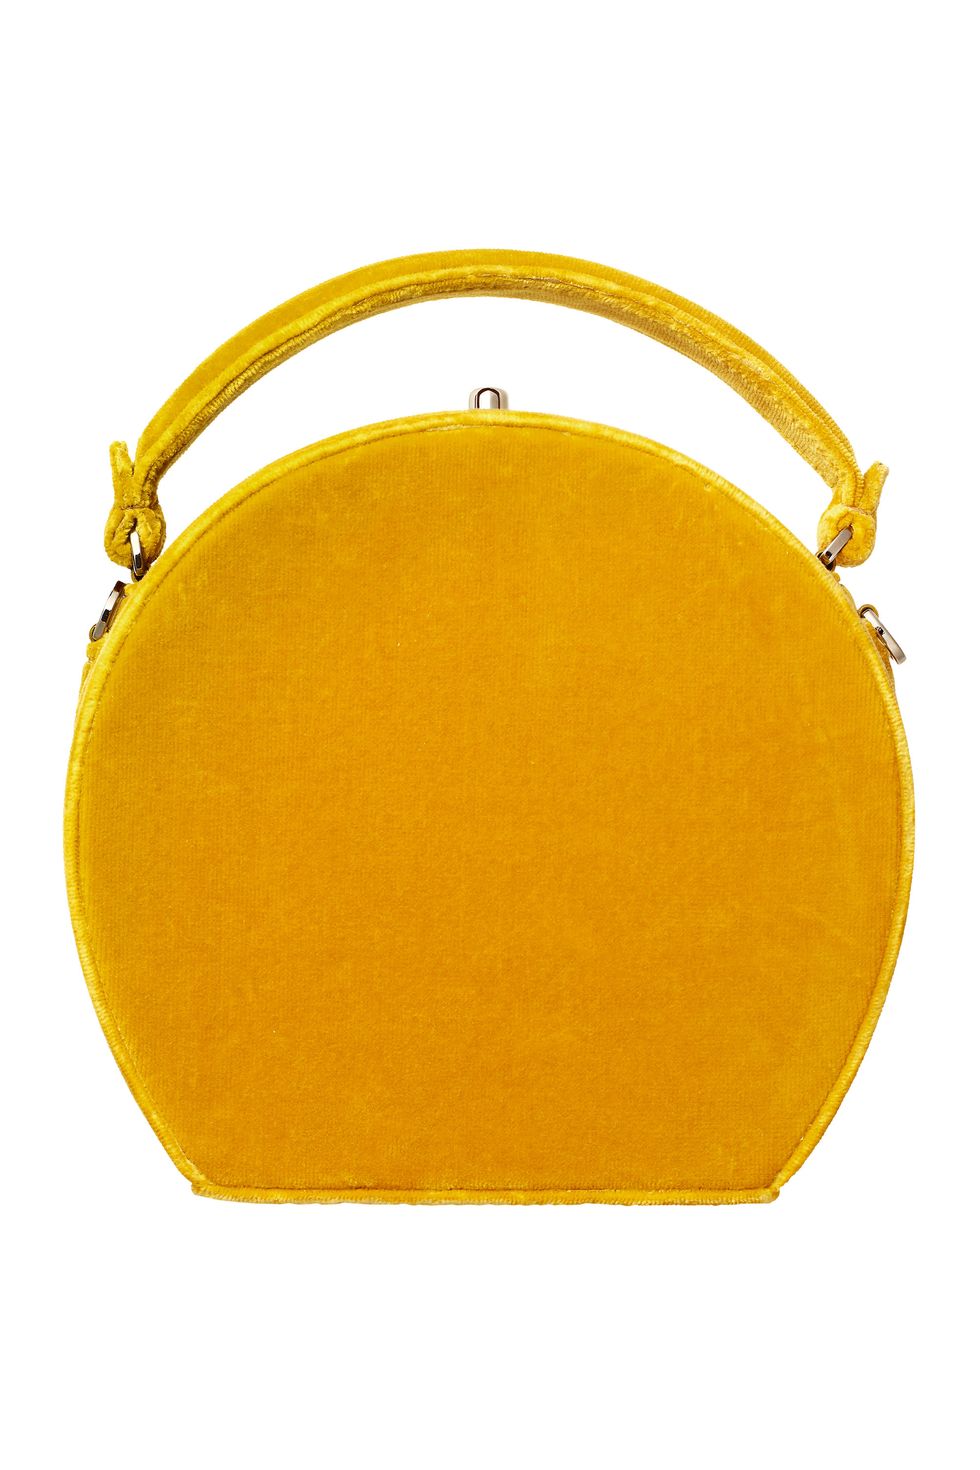 Bag, Yellow, Handbag, Orange, Coin purse, Fashion accessory, Shoulder bag, Circle, Oval, Leather, 